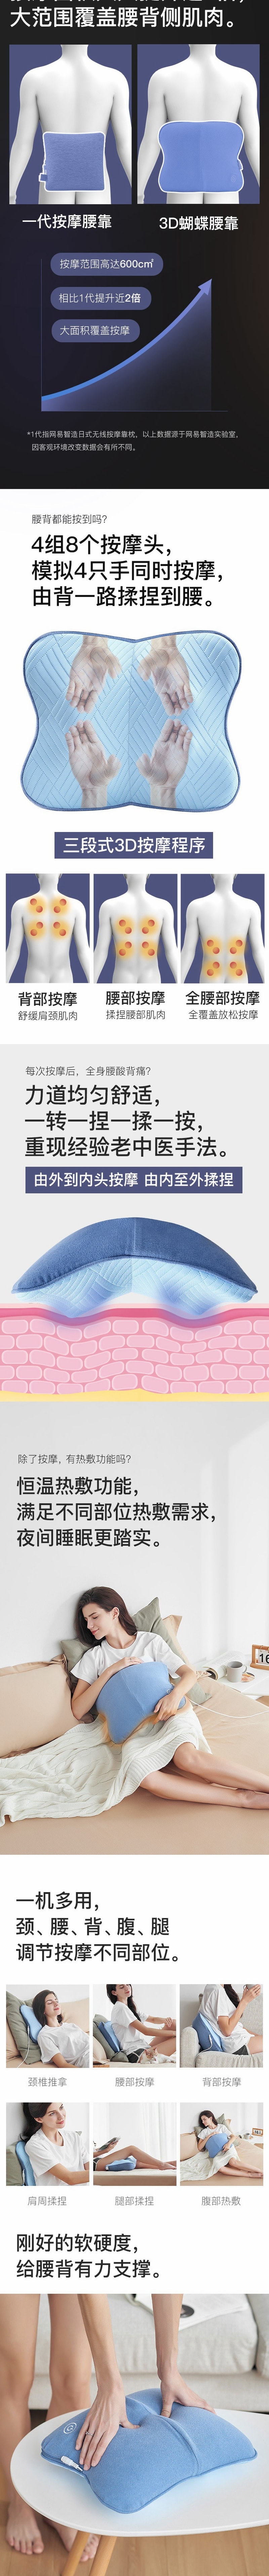 Lifease Butterfly 3D Curved Massage Cushion Haze Blue